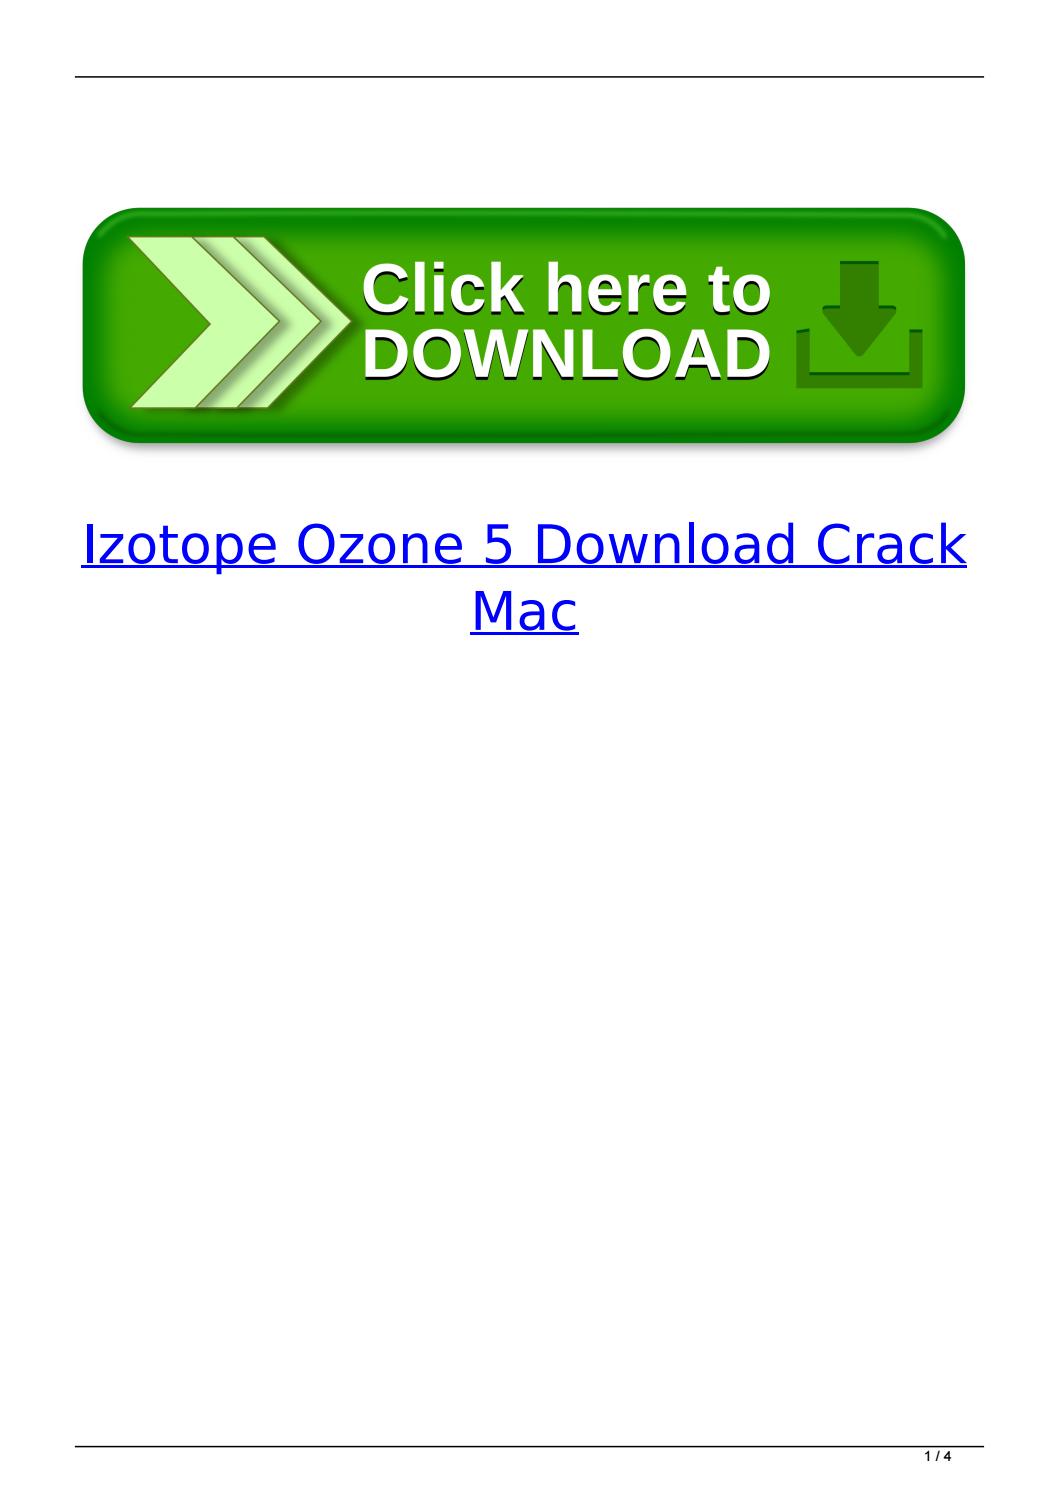 Download izotope ozone 5 full crack mac